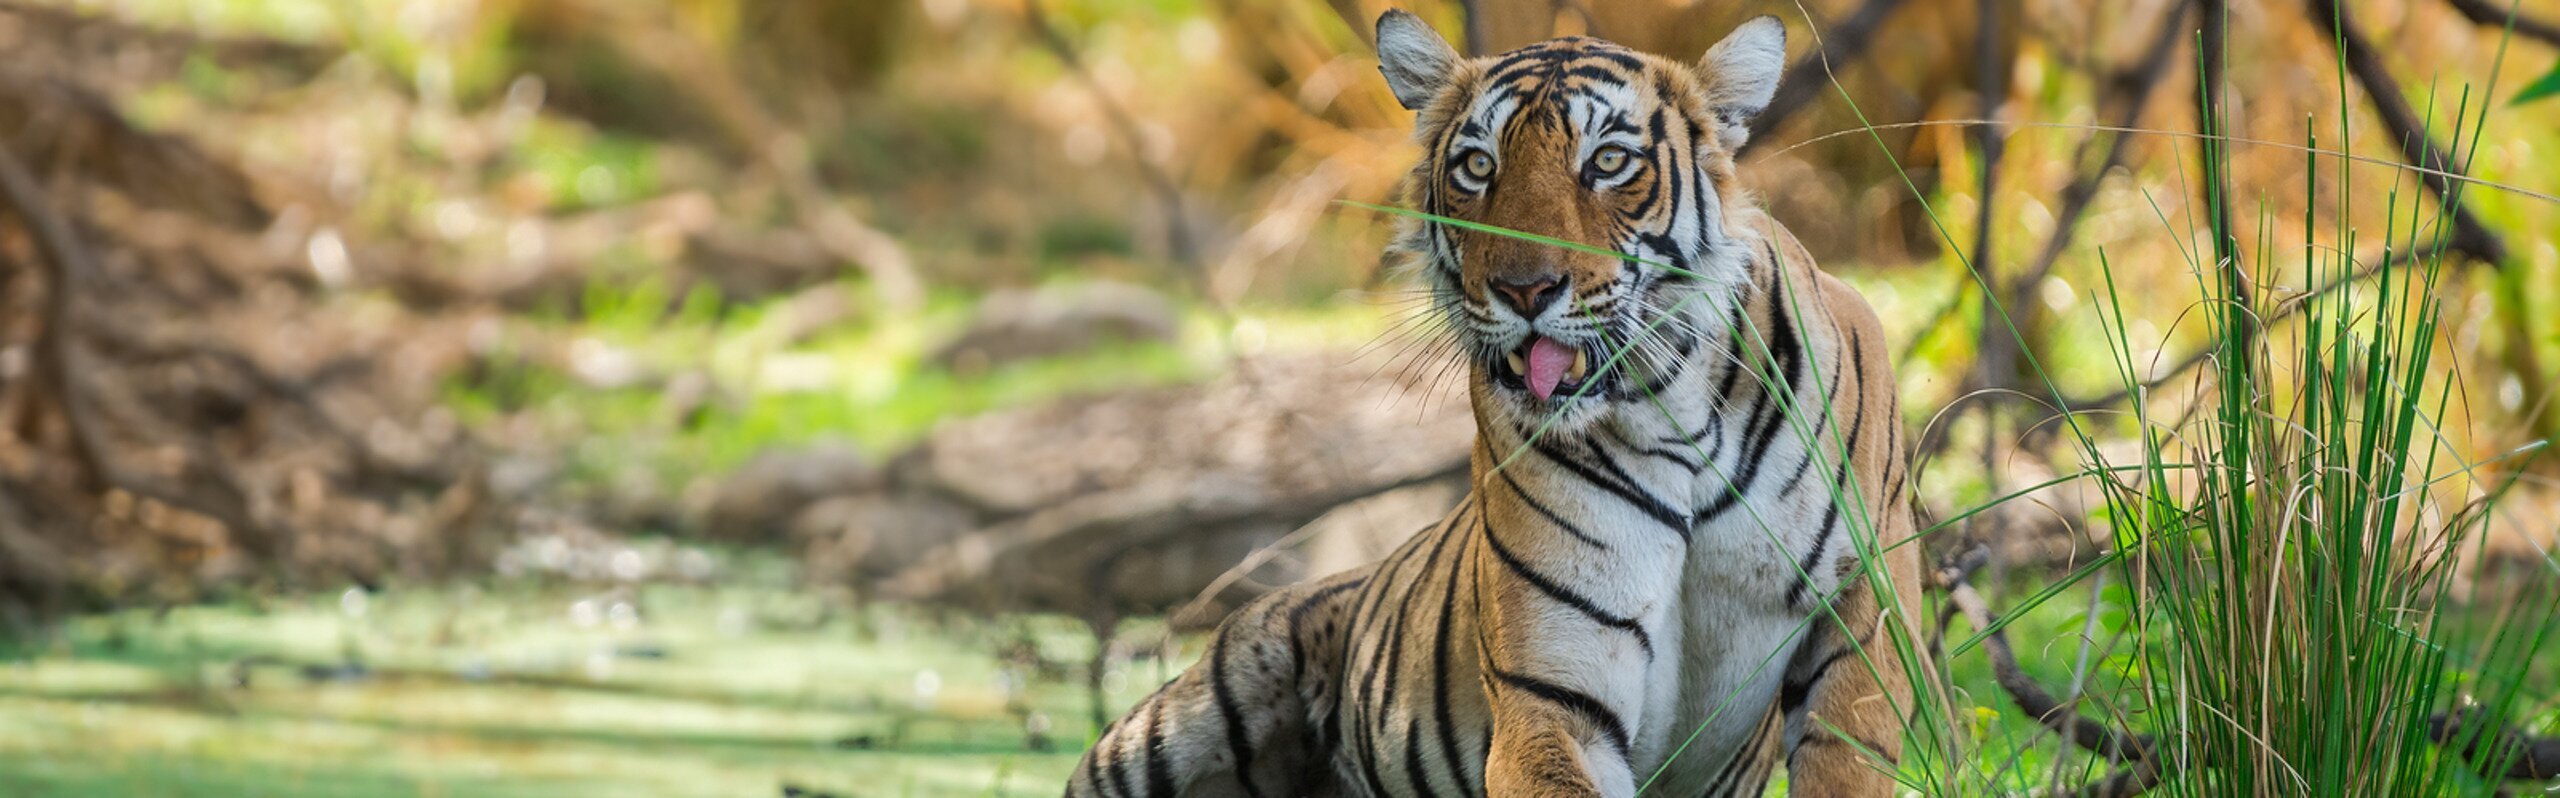 9-Day India Tiger Safari and Golden Triangle Tour